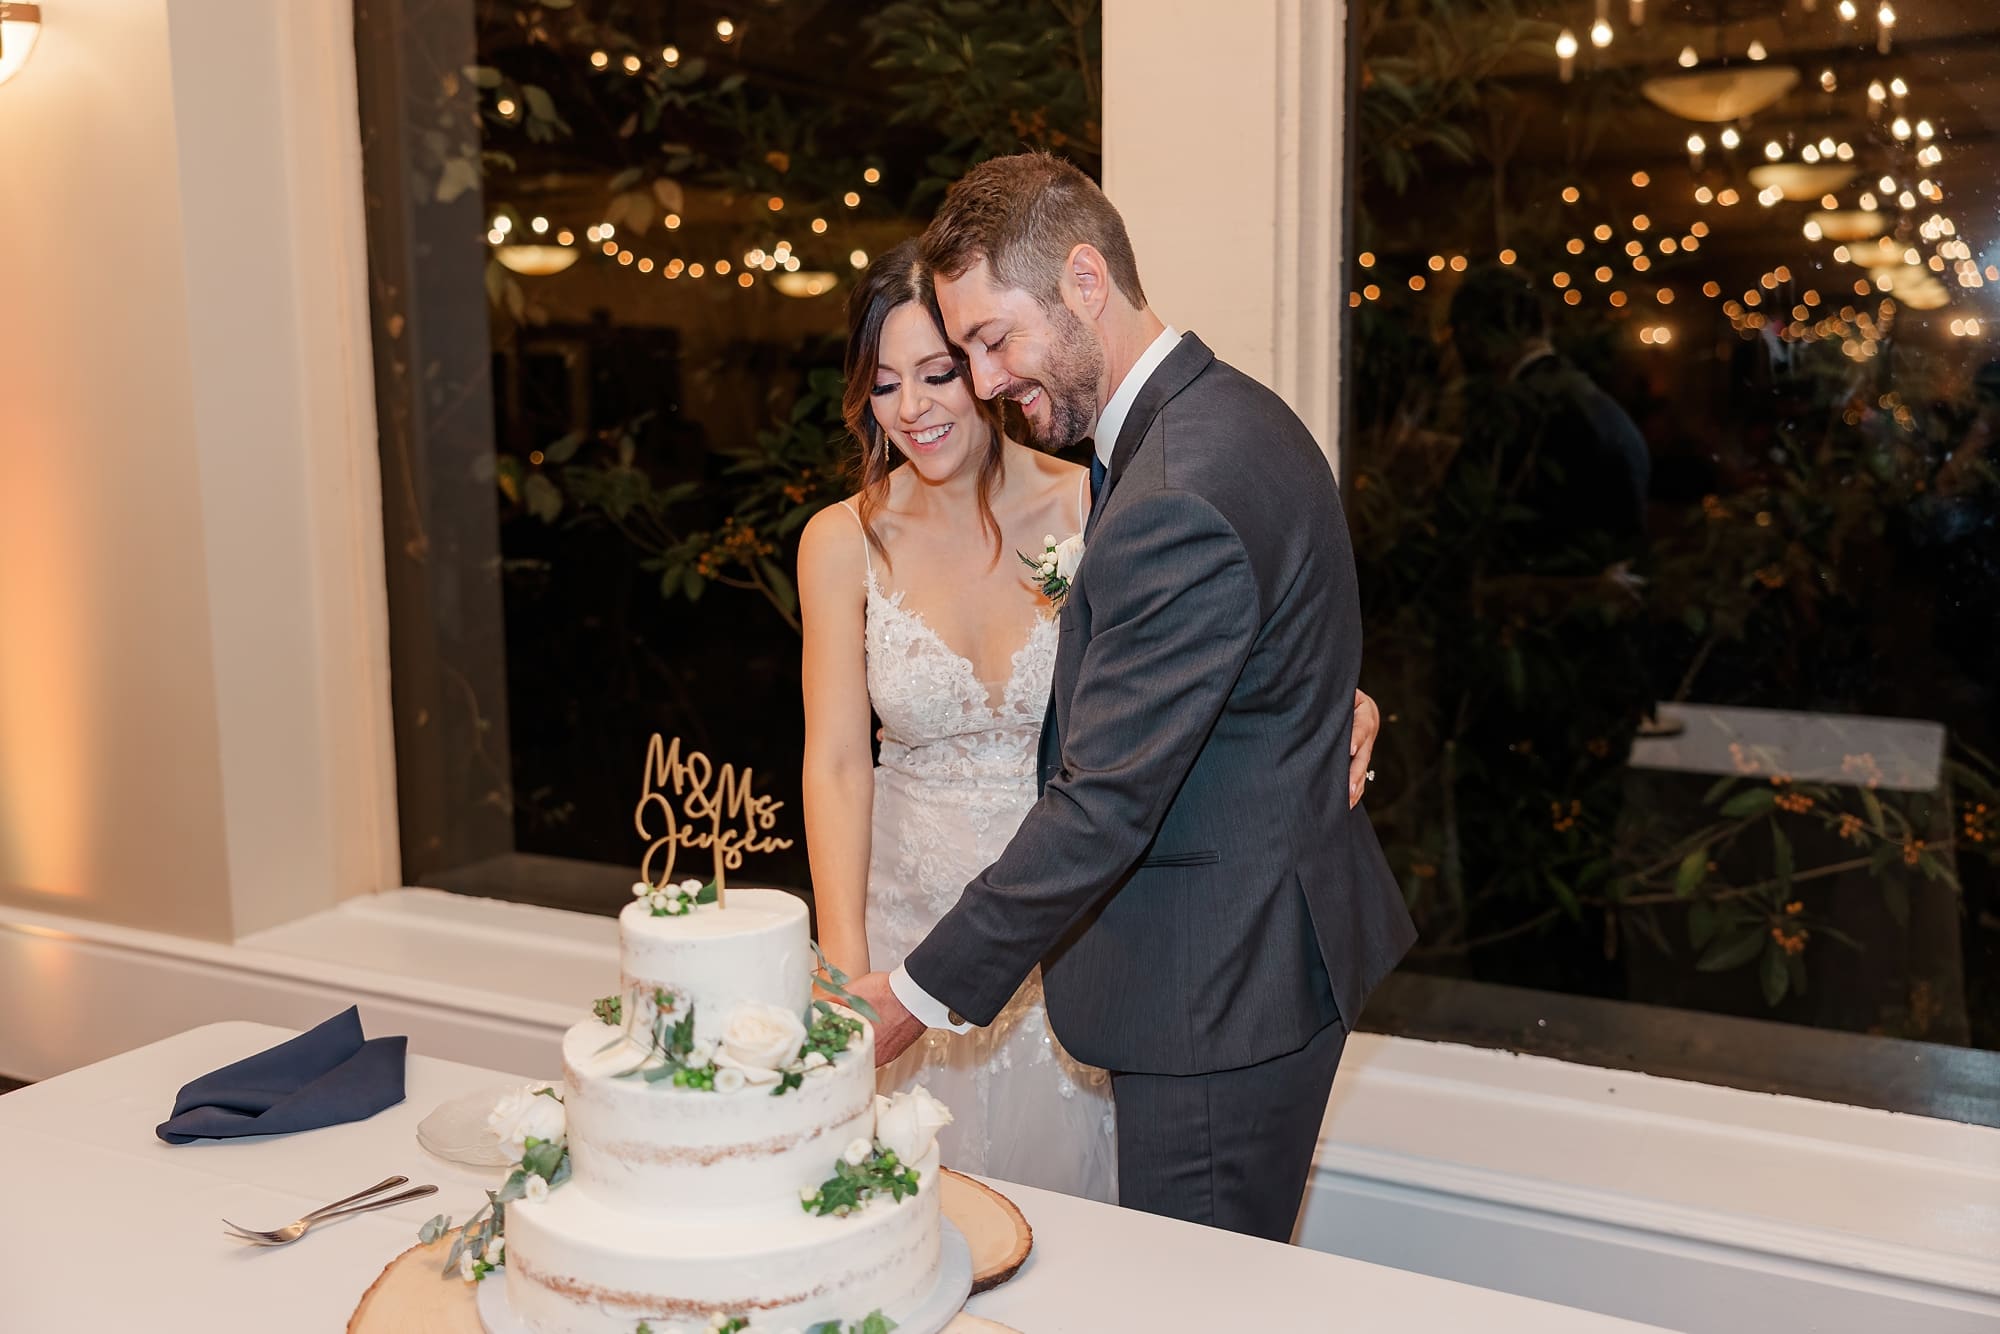 Cake cutting photos at wedding in Carmel